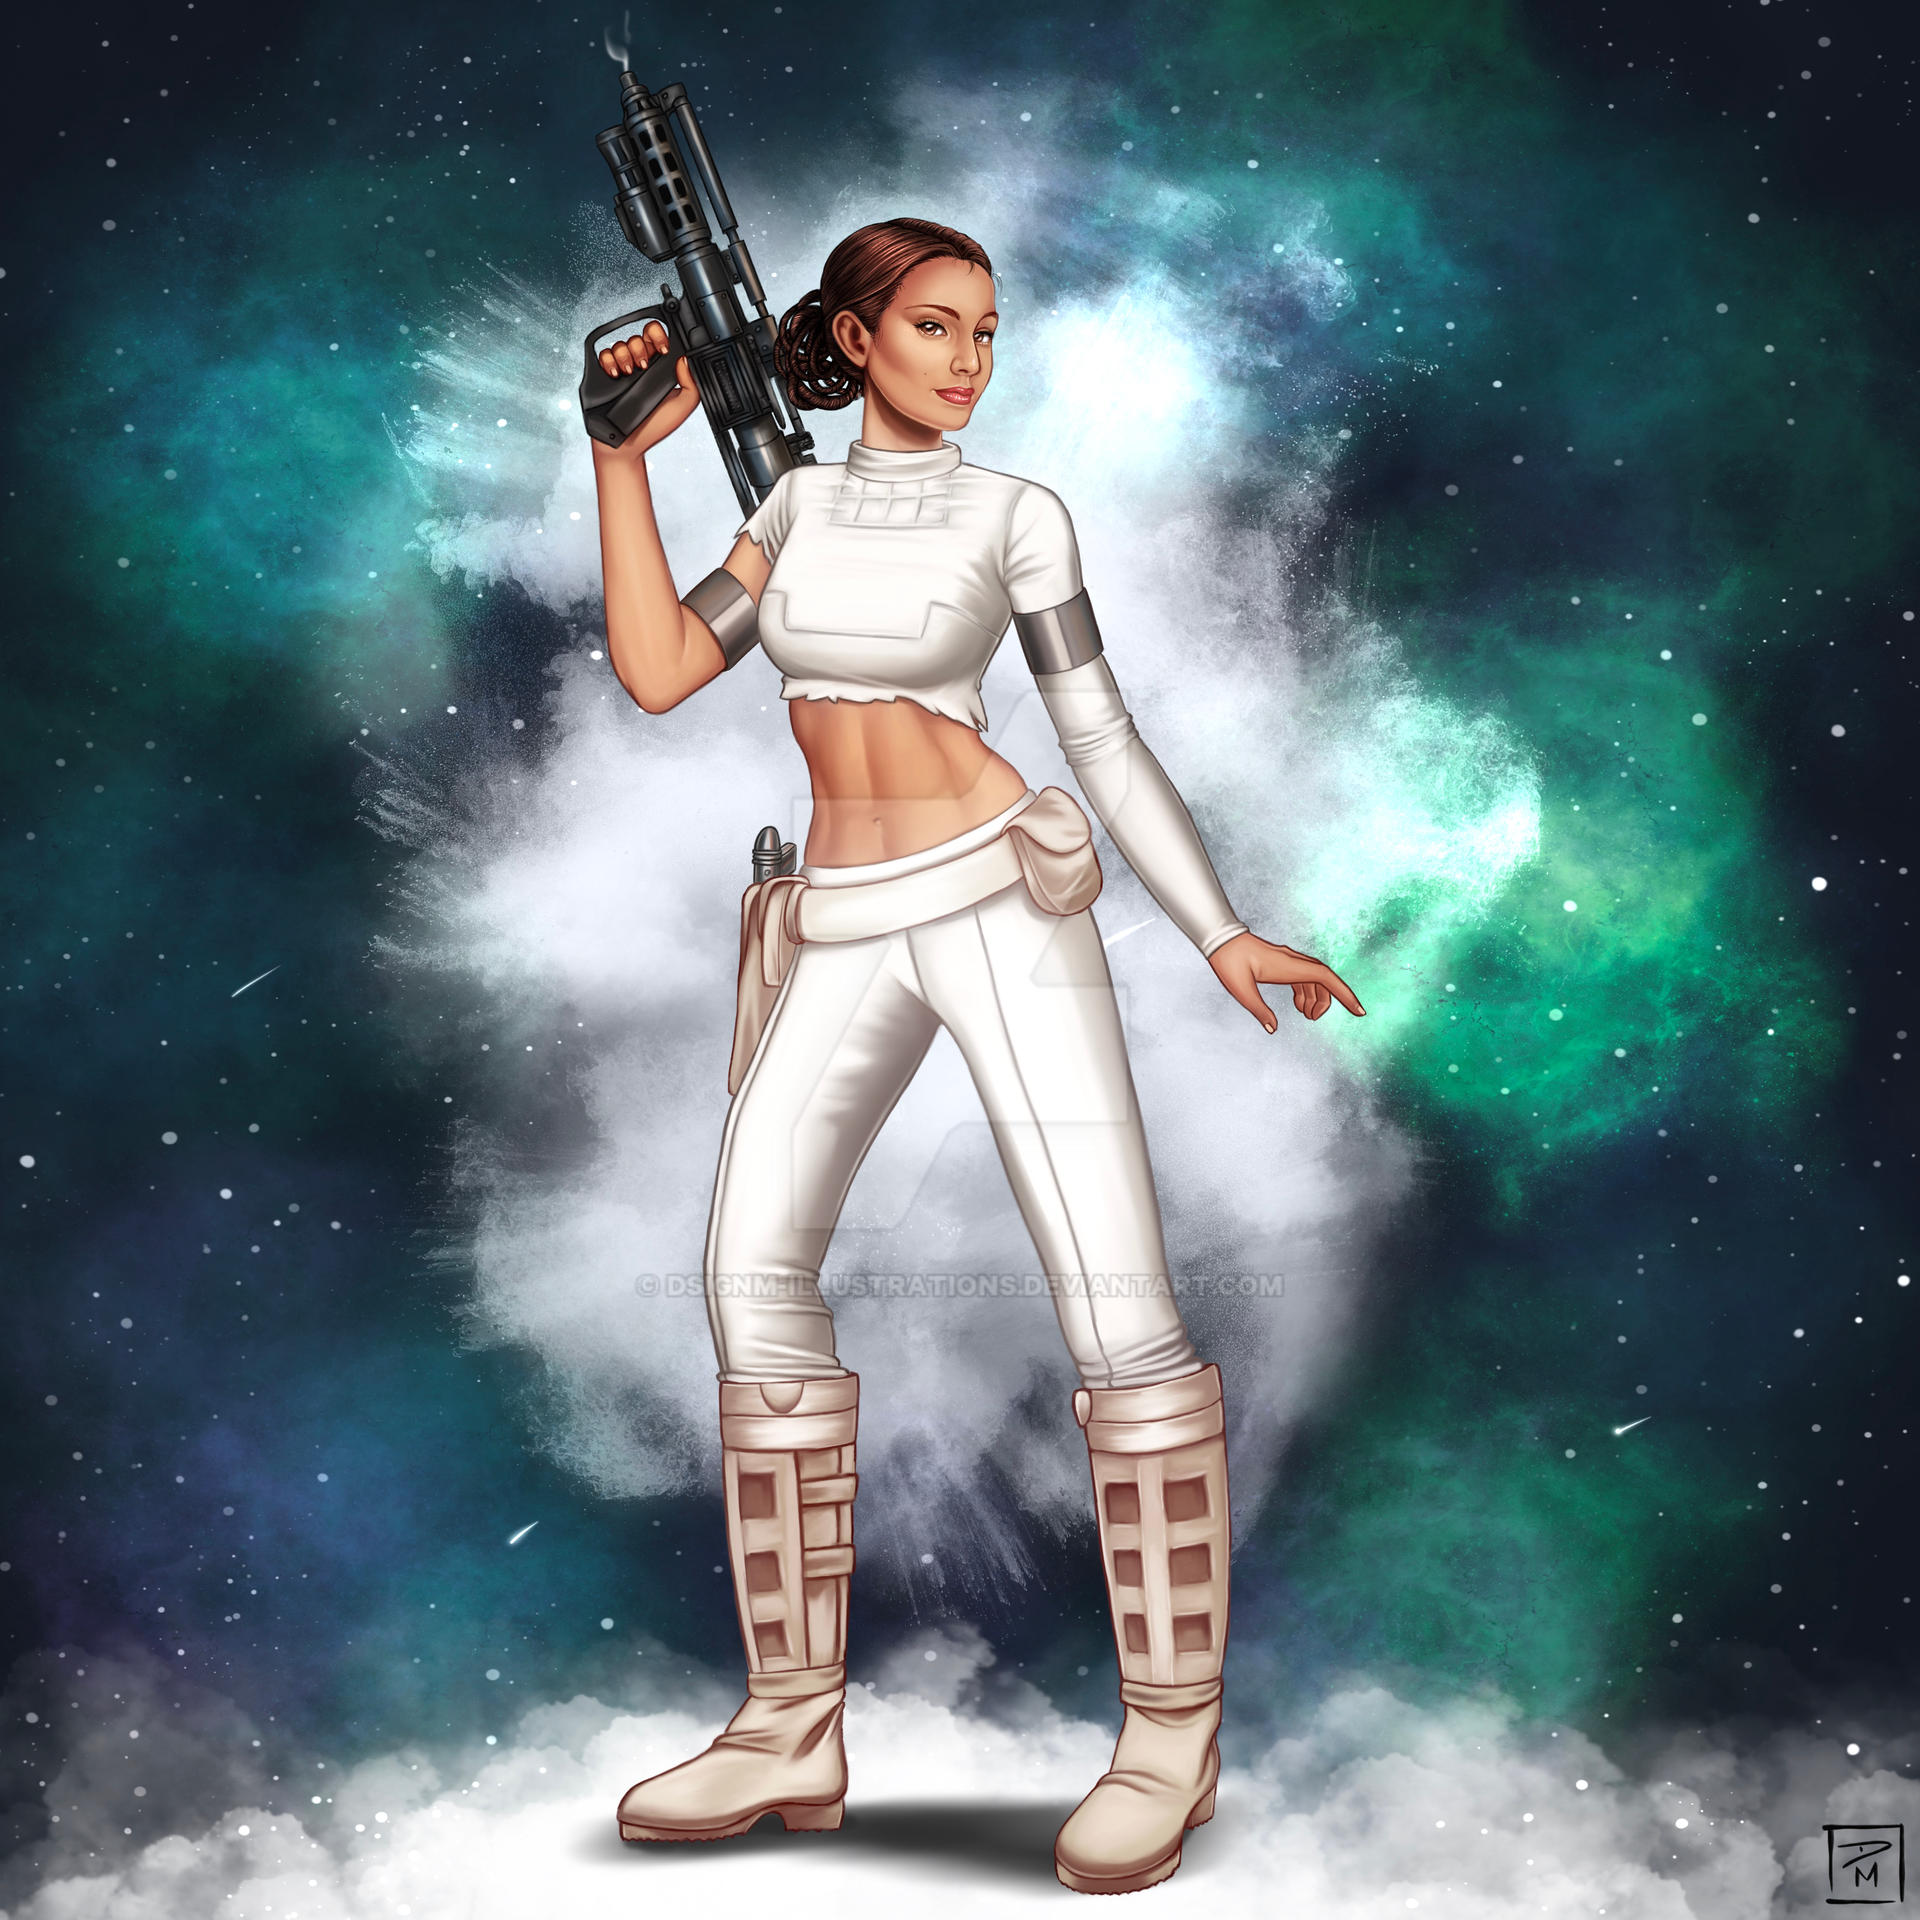 Star Wars | Padme Amidala DsignM-Illustrations on DeviantArt